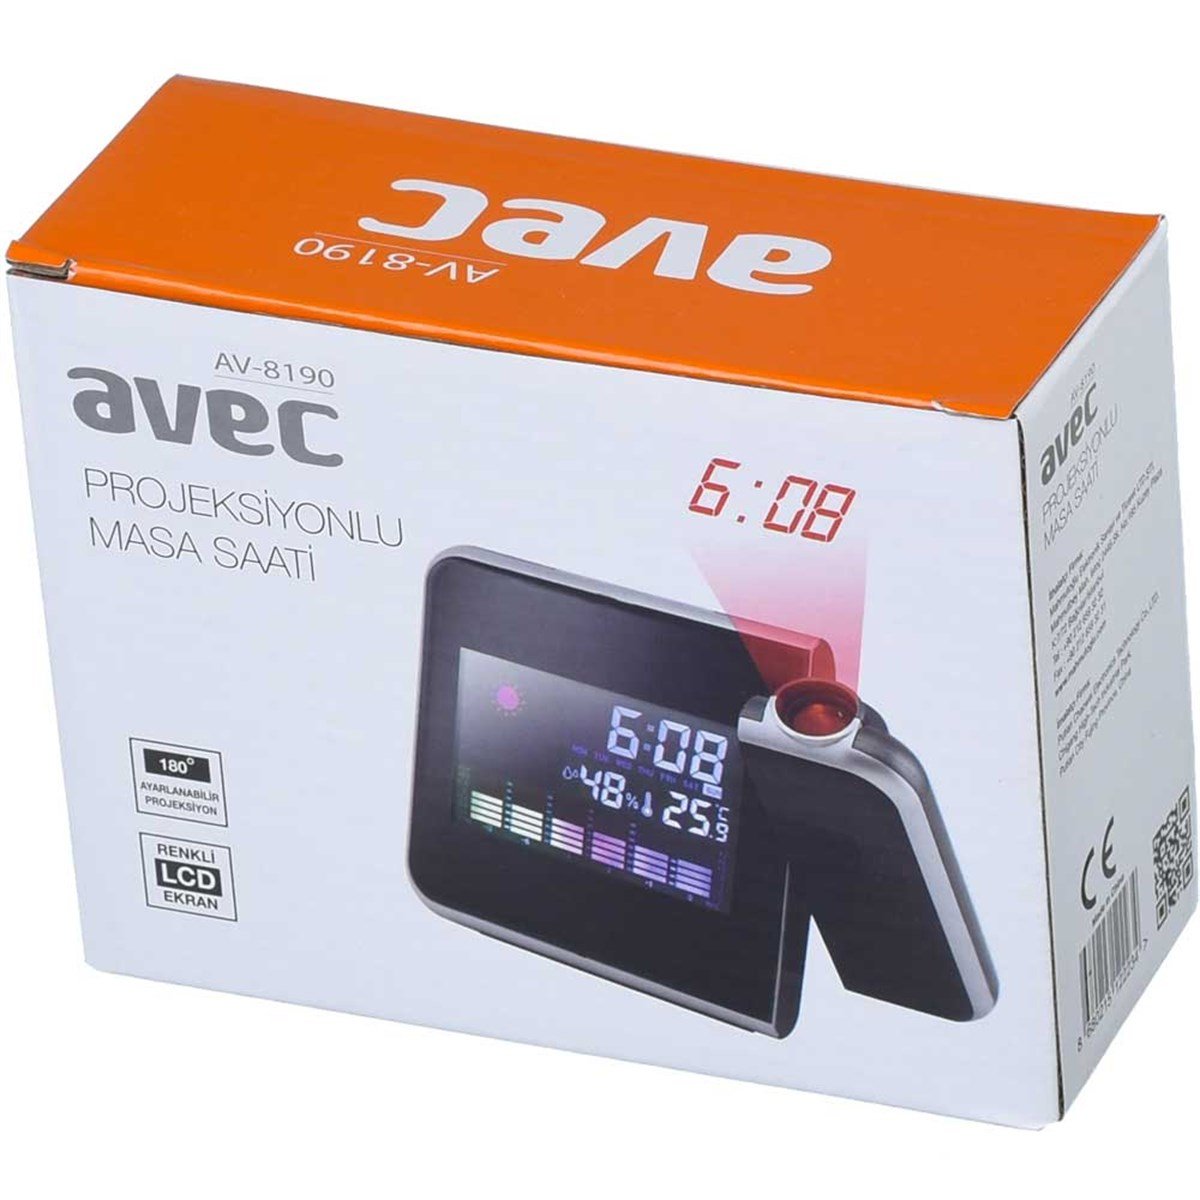 AVEC Projeksiyonlu Masa Saati AV-8190